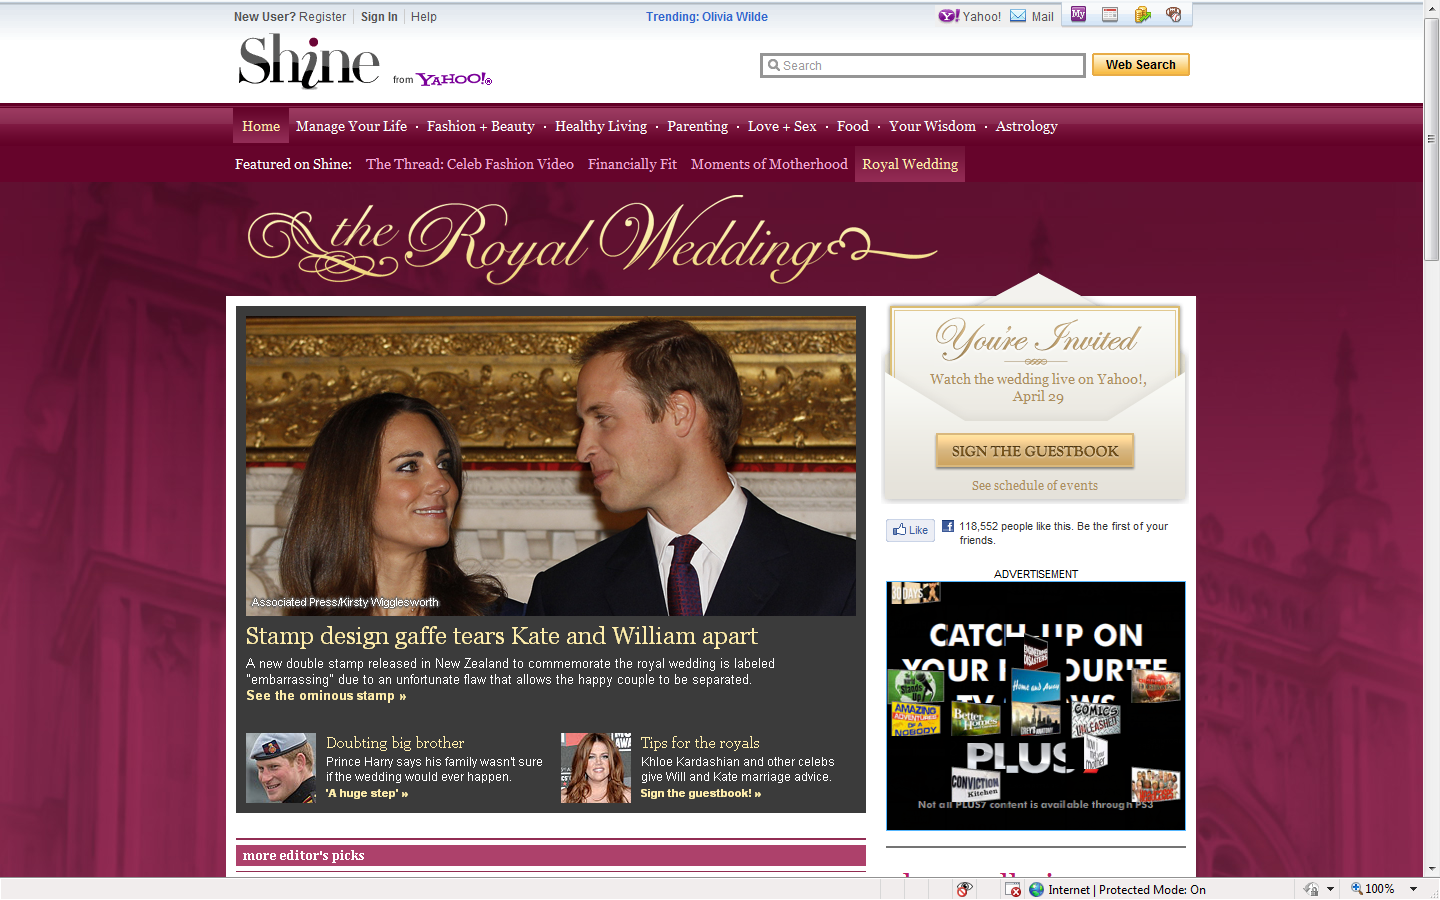 Prince William Wedding News: